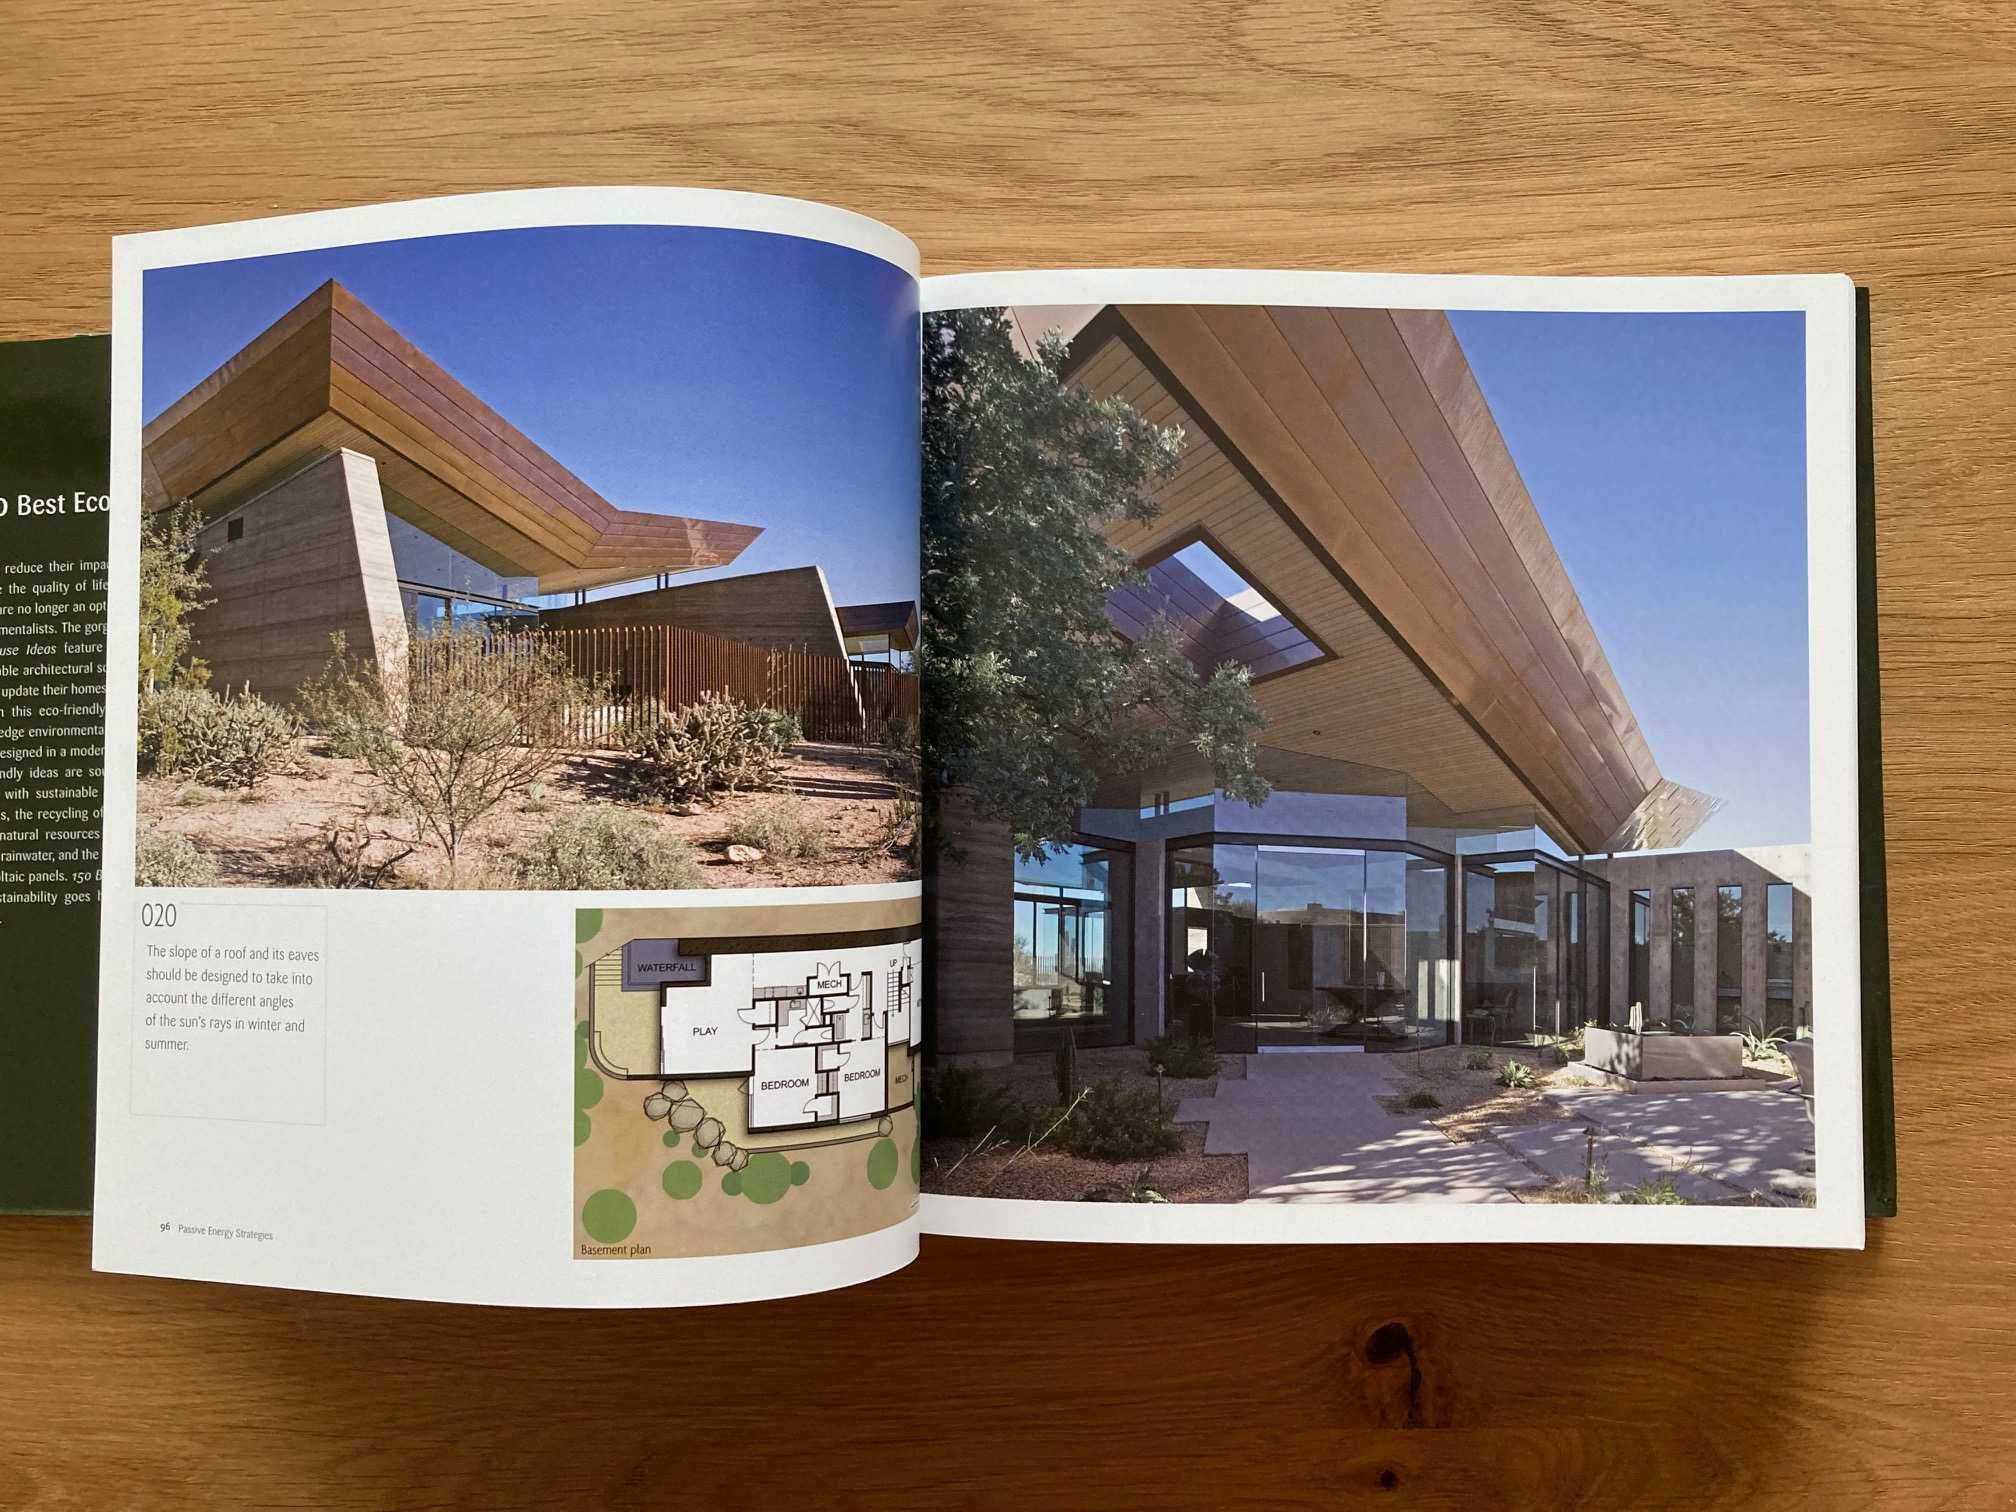 150 best eco house ideas - Collins Design Architektura